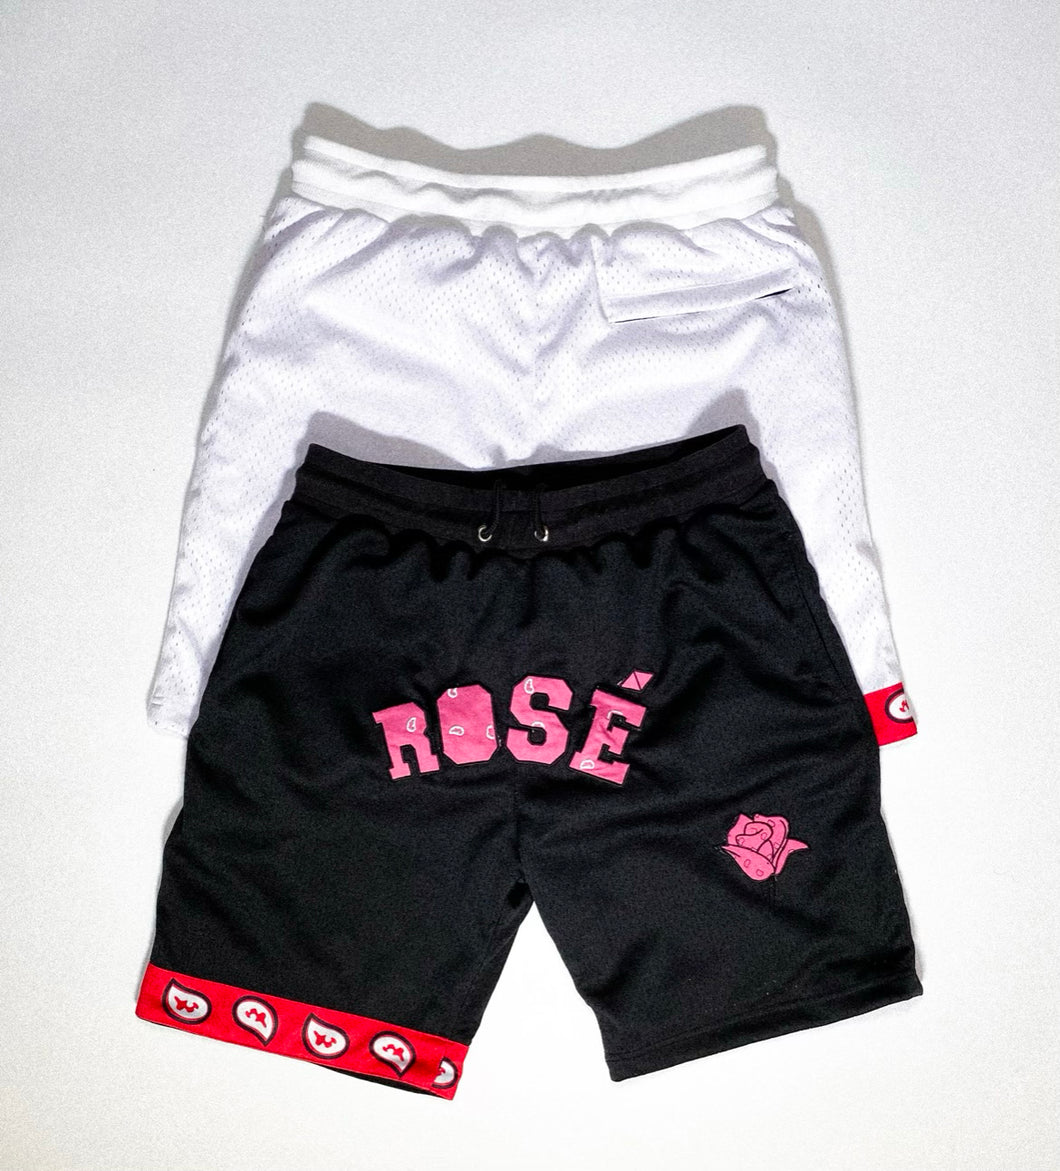 Rosé Basketball Shorts (Pre-Order)